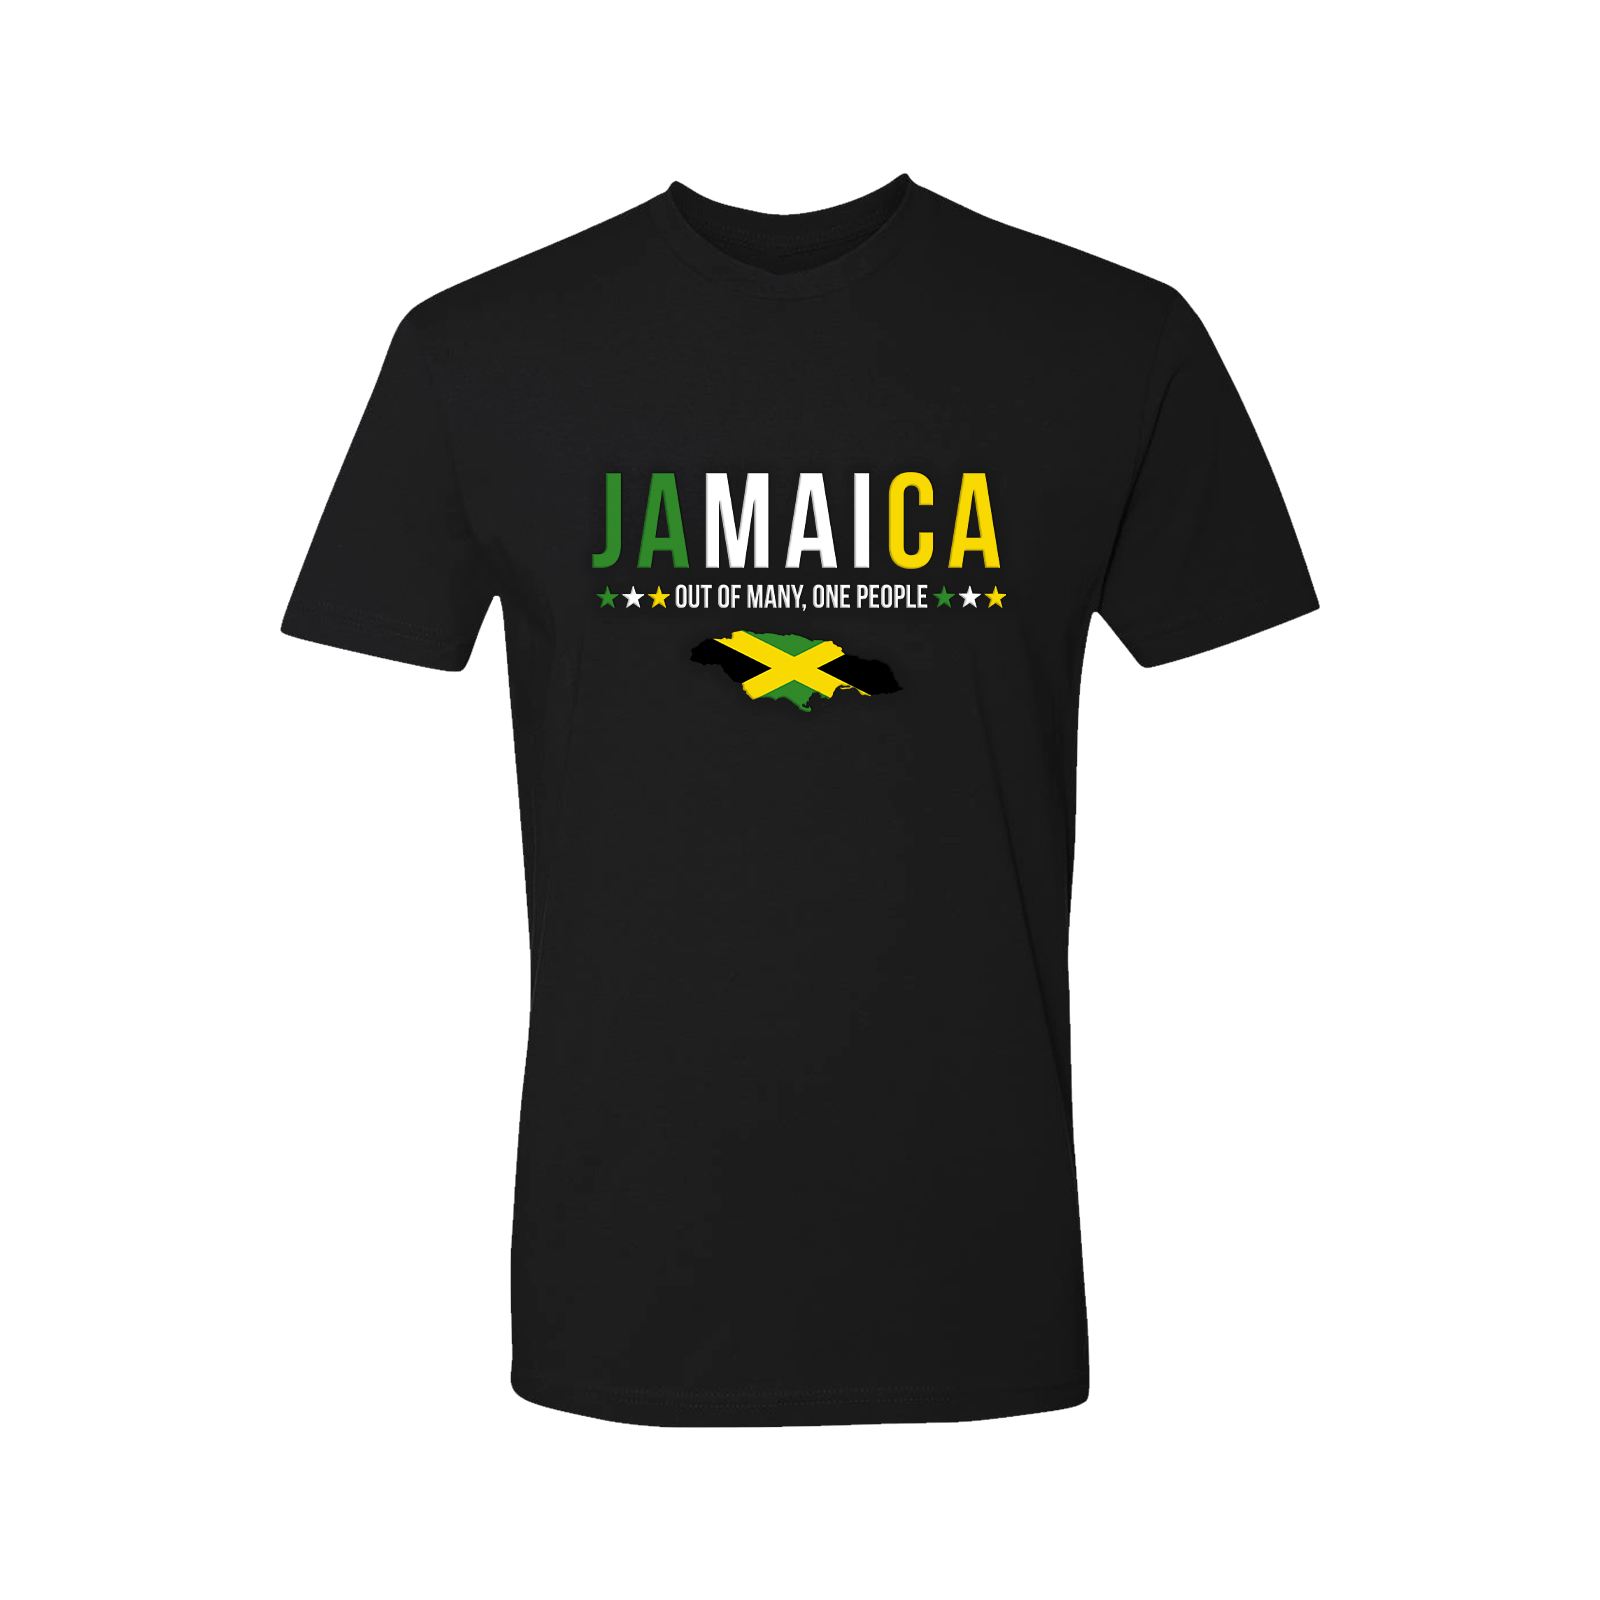 Jamaica Short Sleeve Shirt - Adult